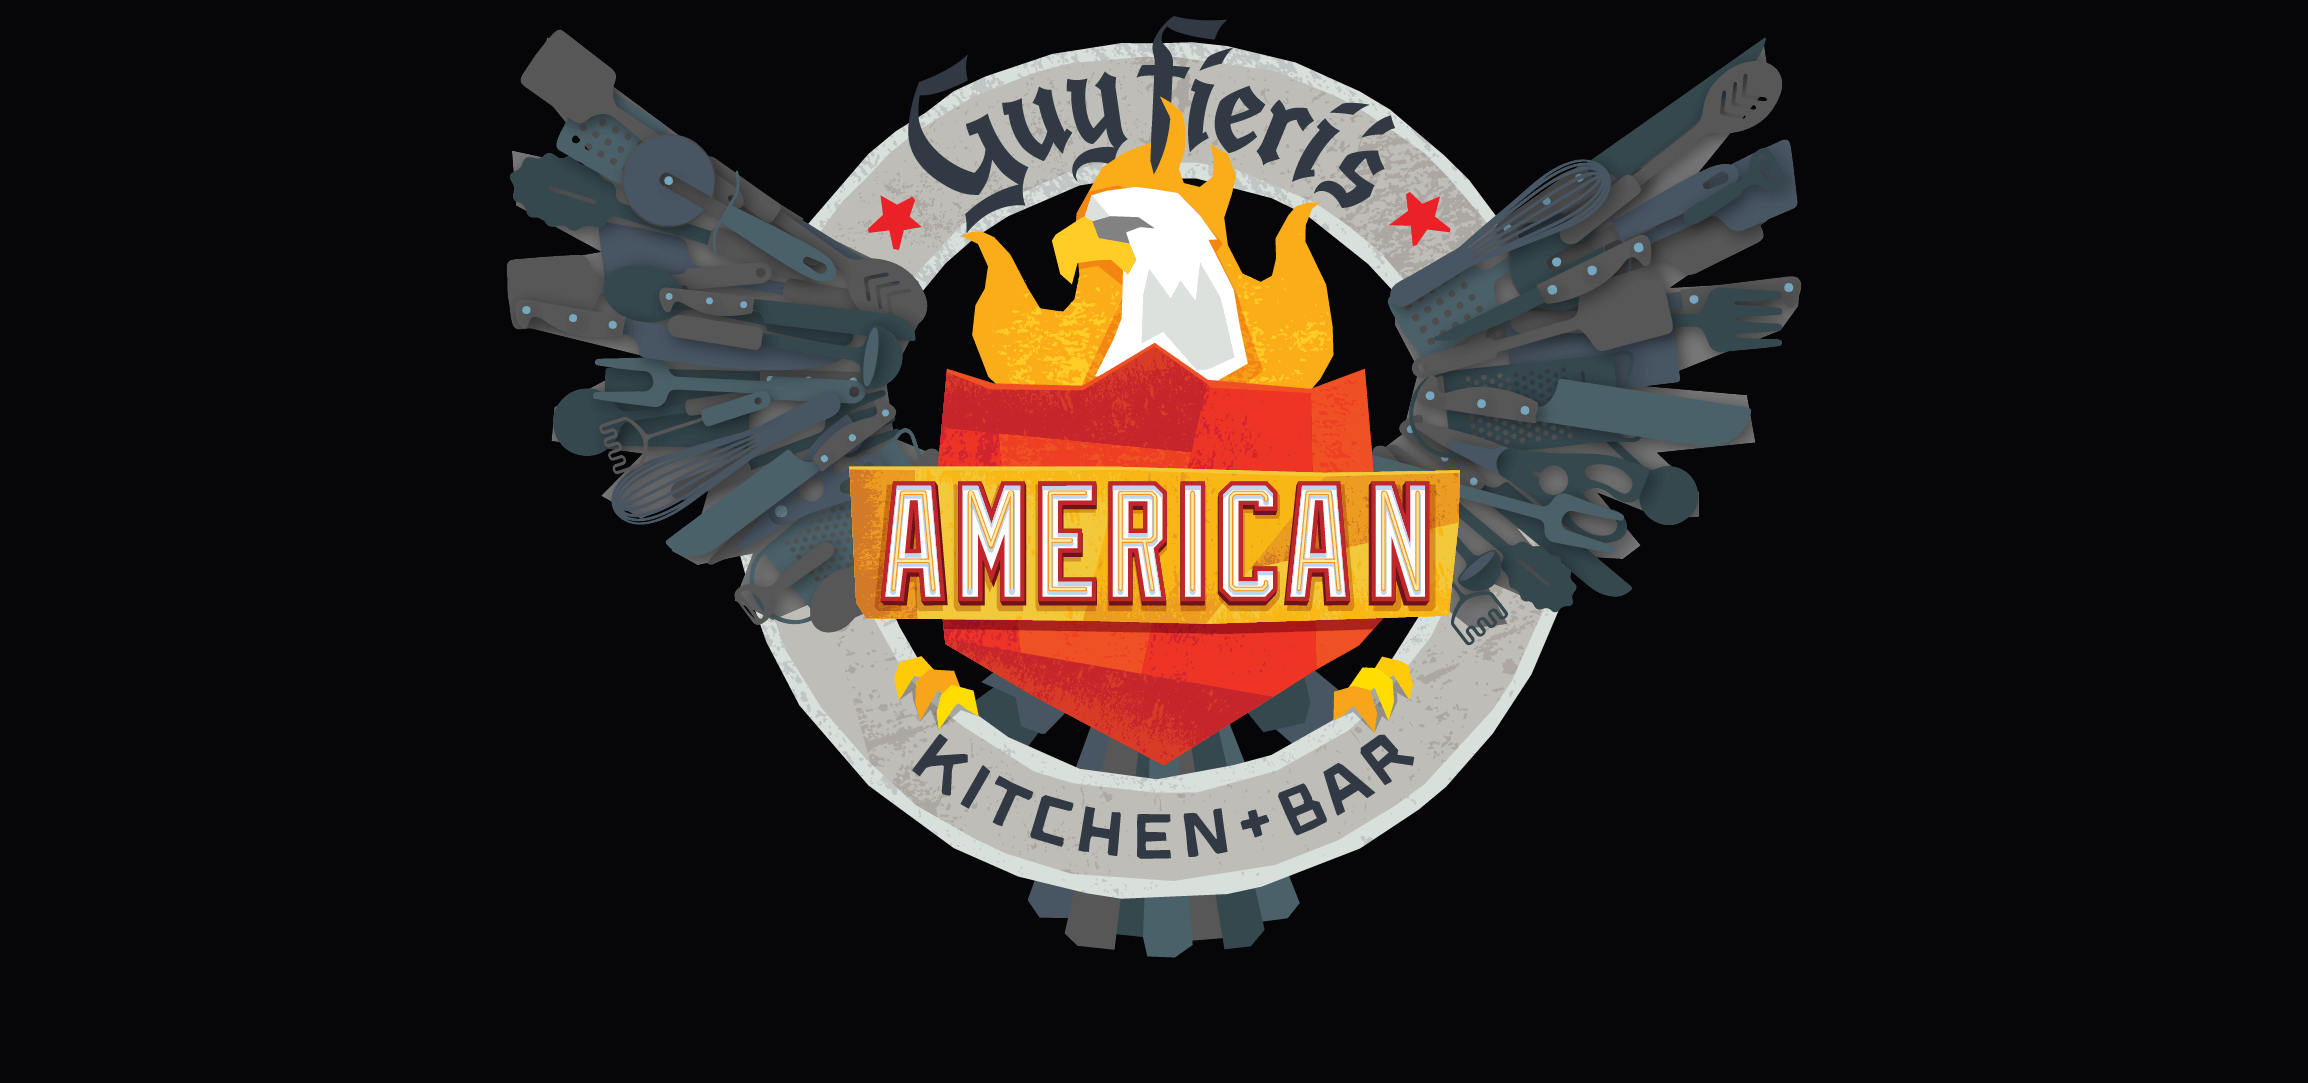 Guy Fieri's American Kitchen+Bar